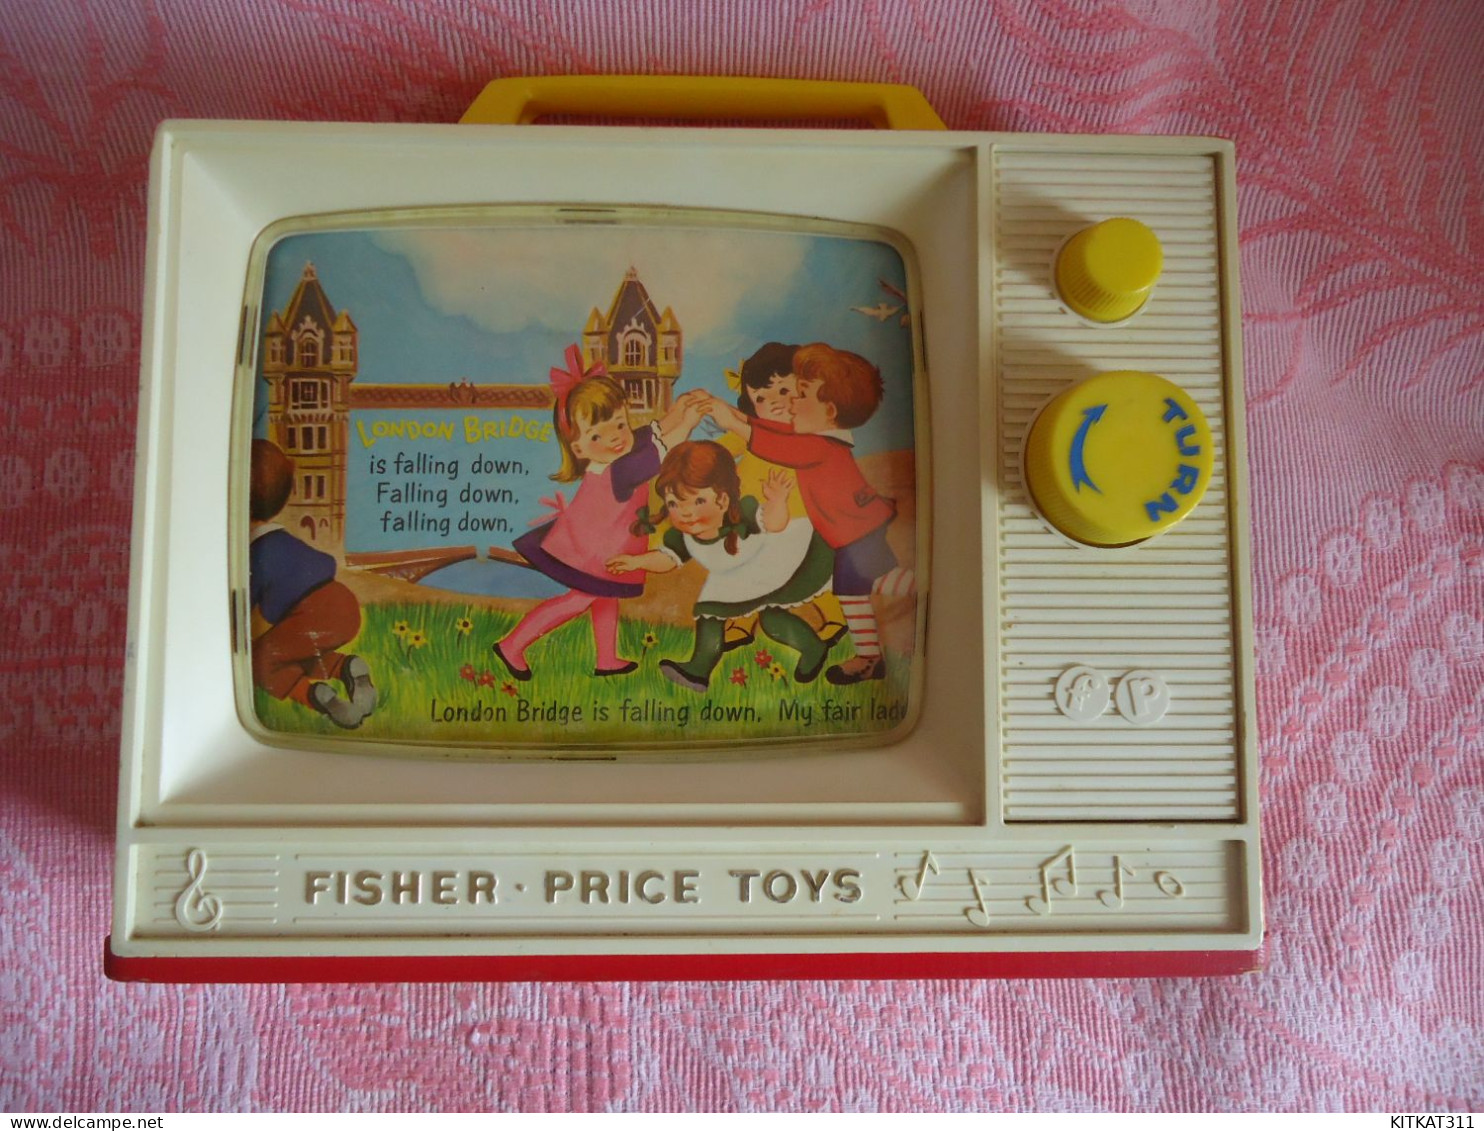 JOUET ANCIENTELEVISION FISCHER PRICE TOYS-PLAYS LONDON BRIDGE-1966 - Toy Memorabilia